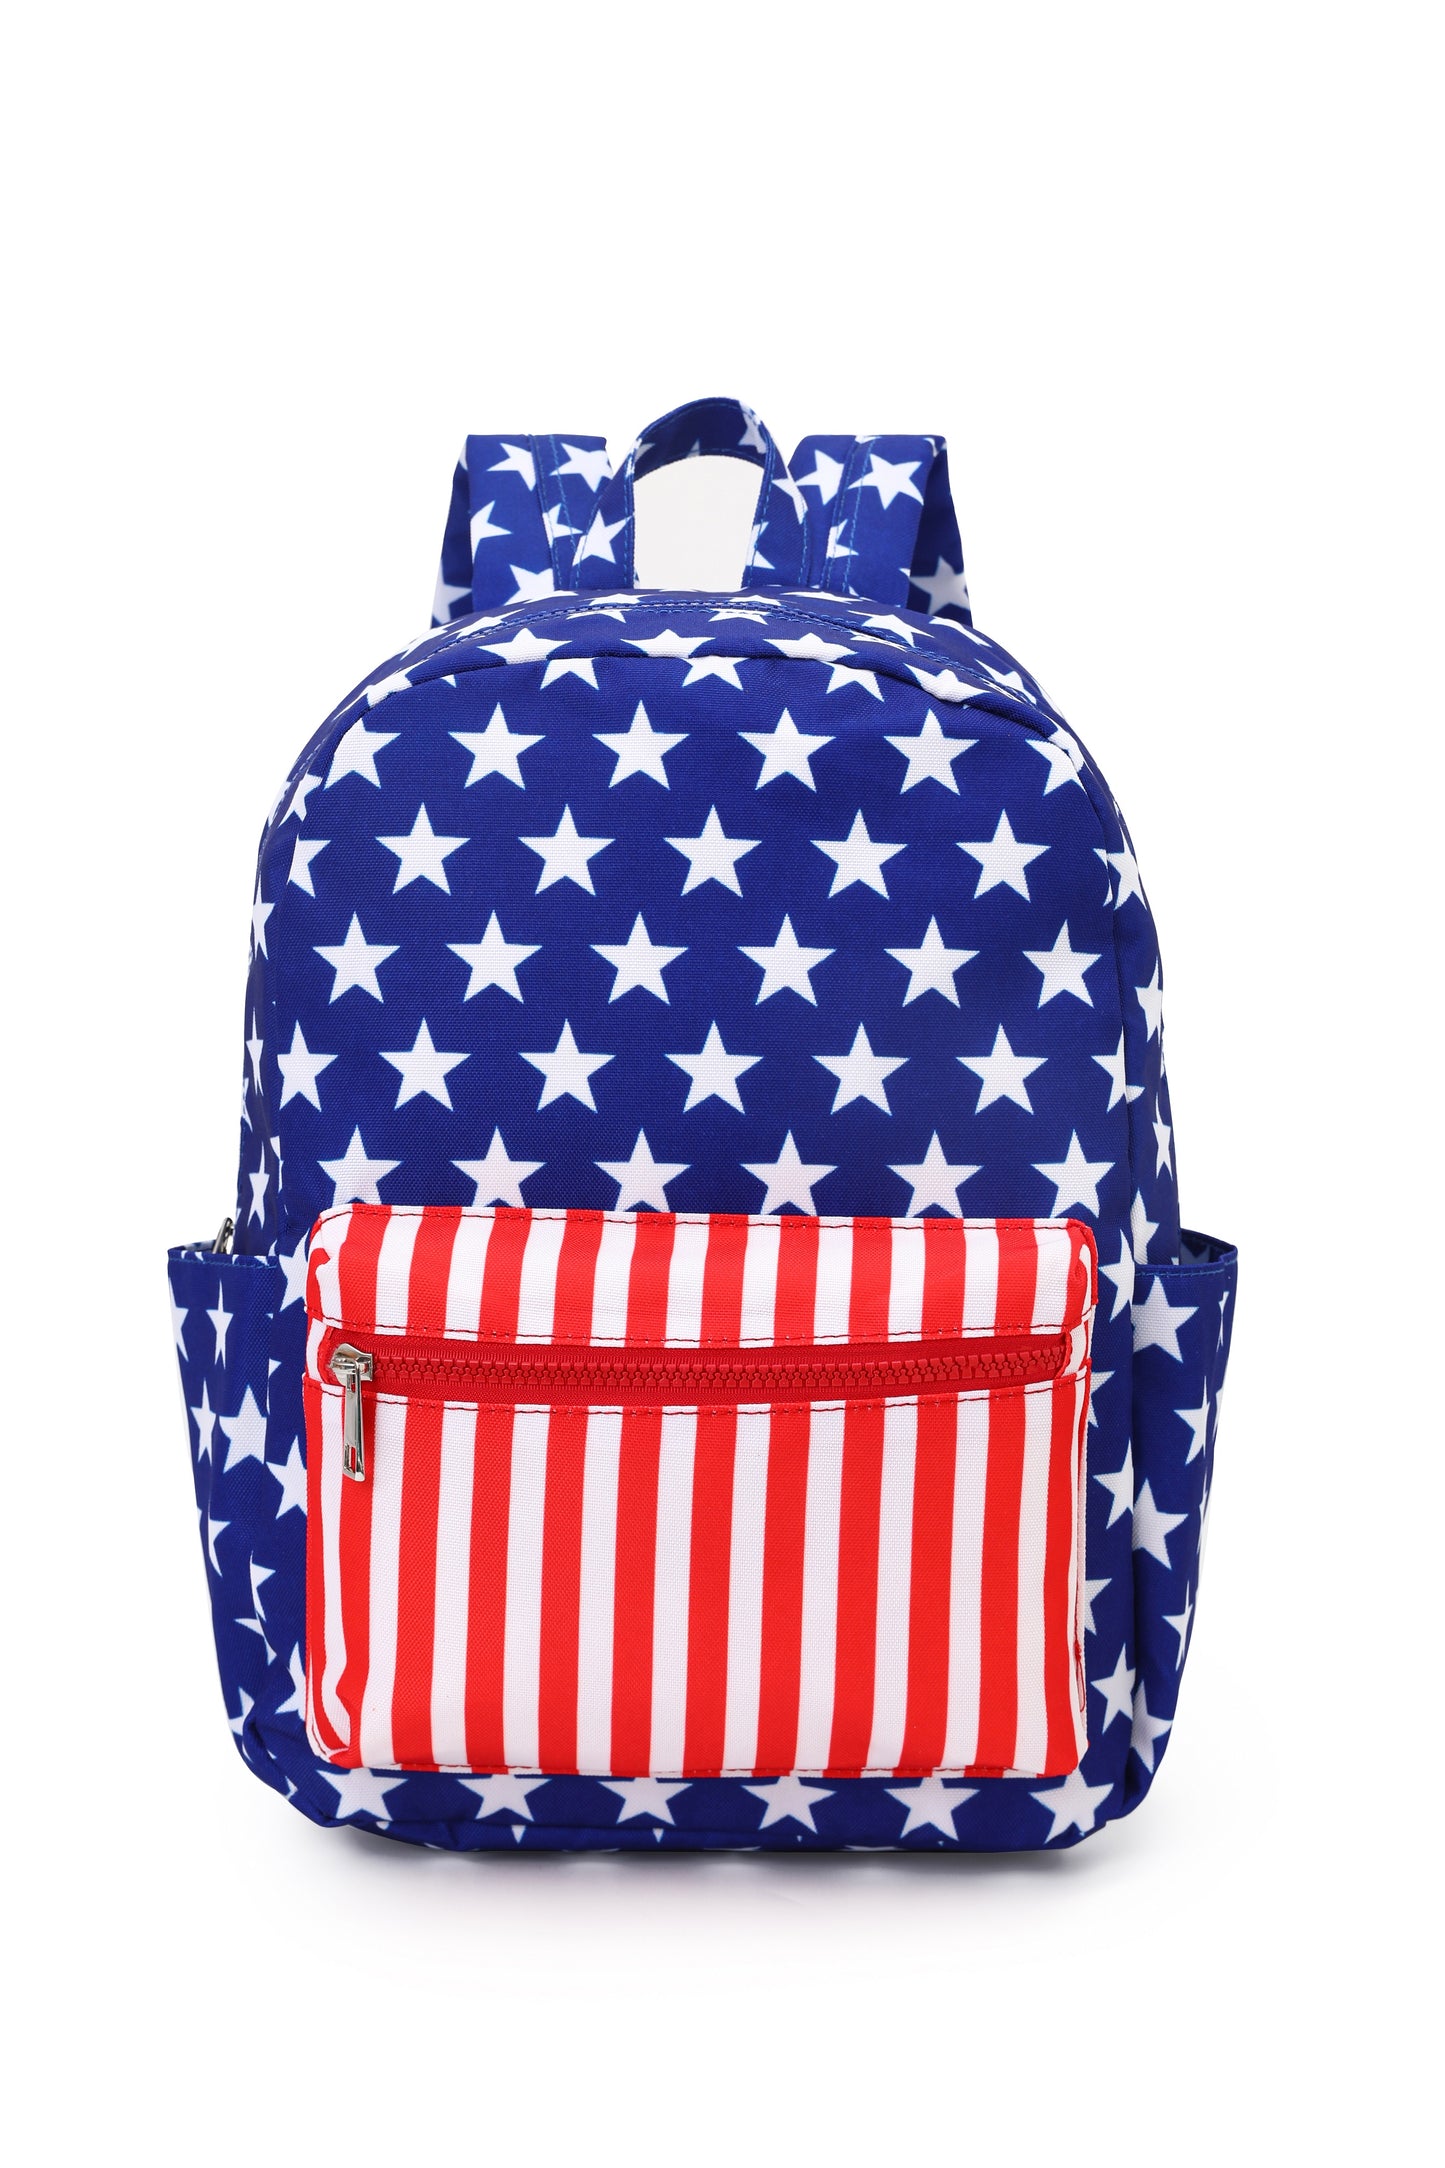 Blue Star Red Stripe Patriotic Kids Backpack